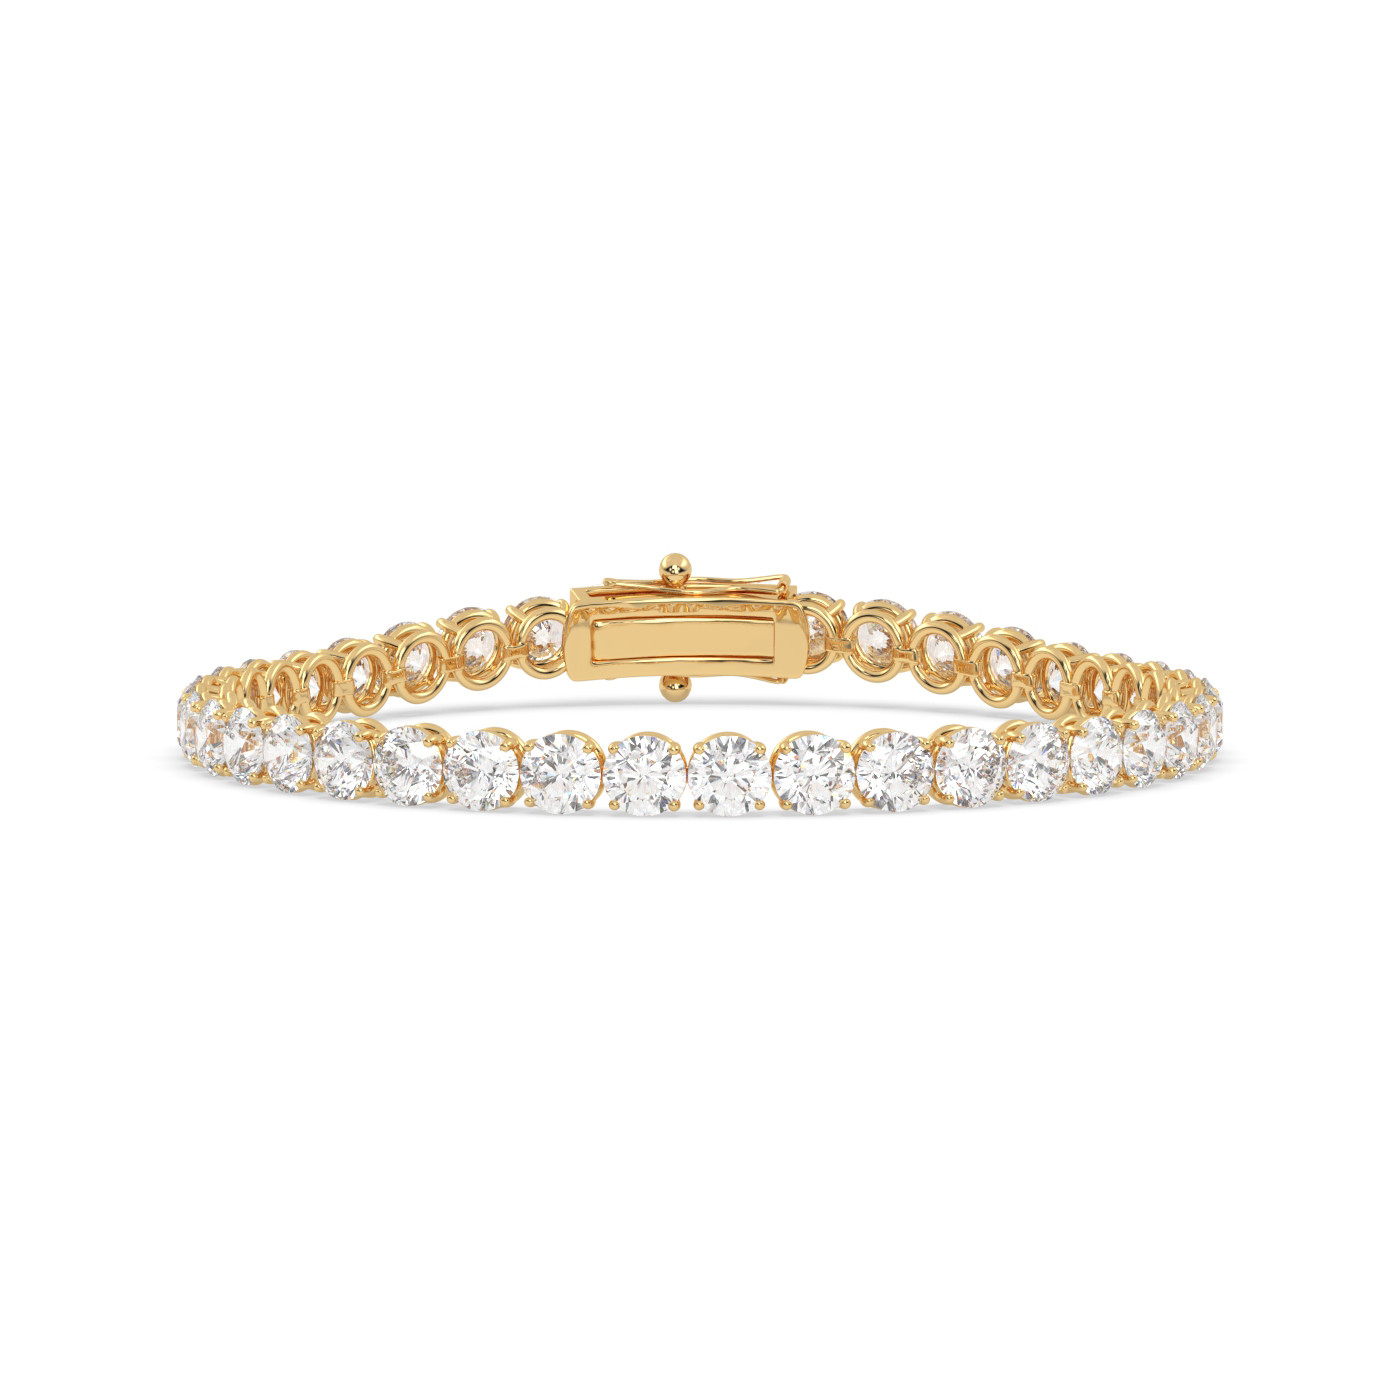 18k yellow gold 10 carat round diamond tennis bracelet with traditional lock sytem